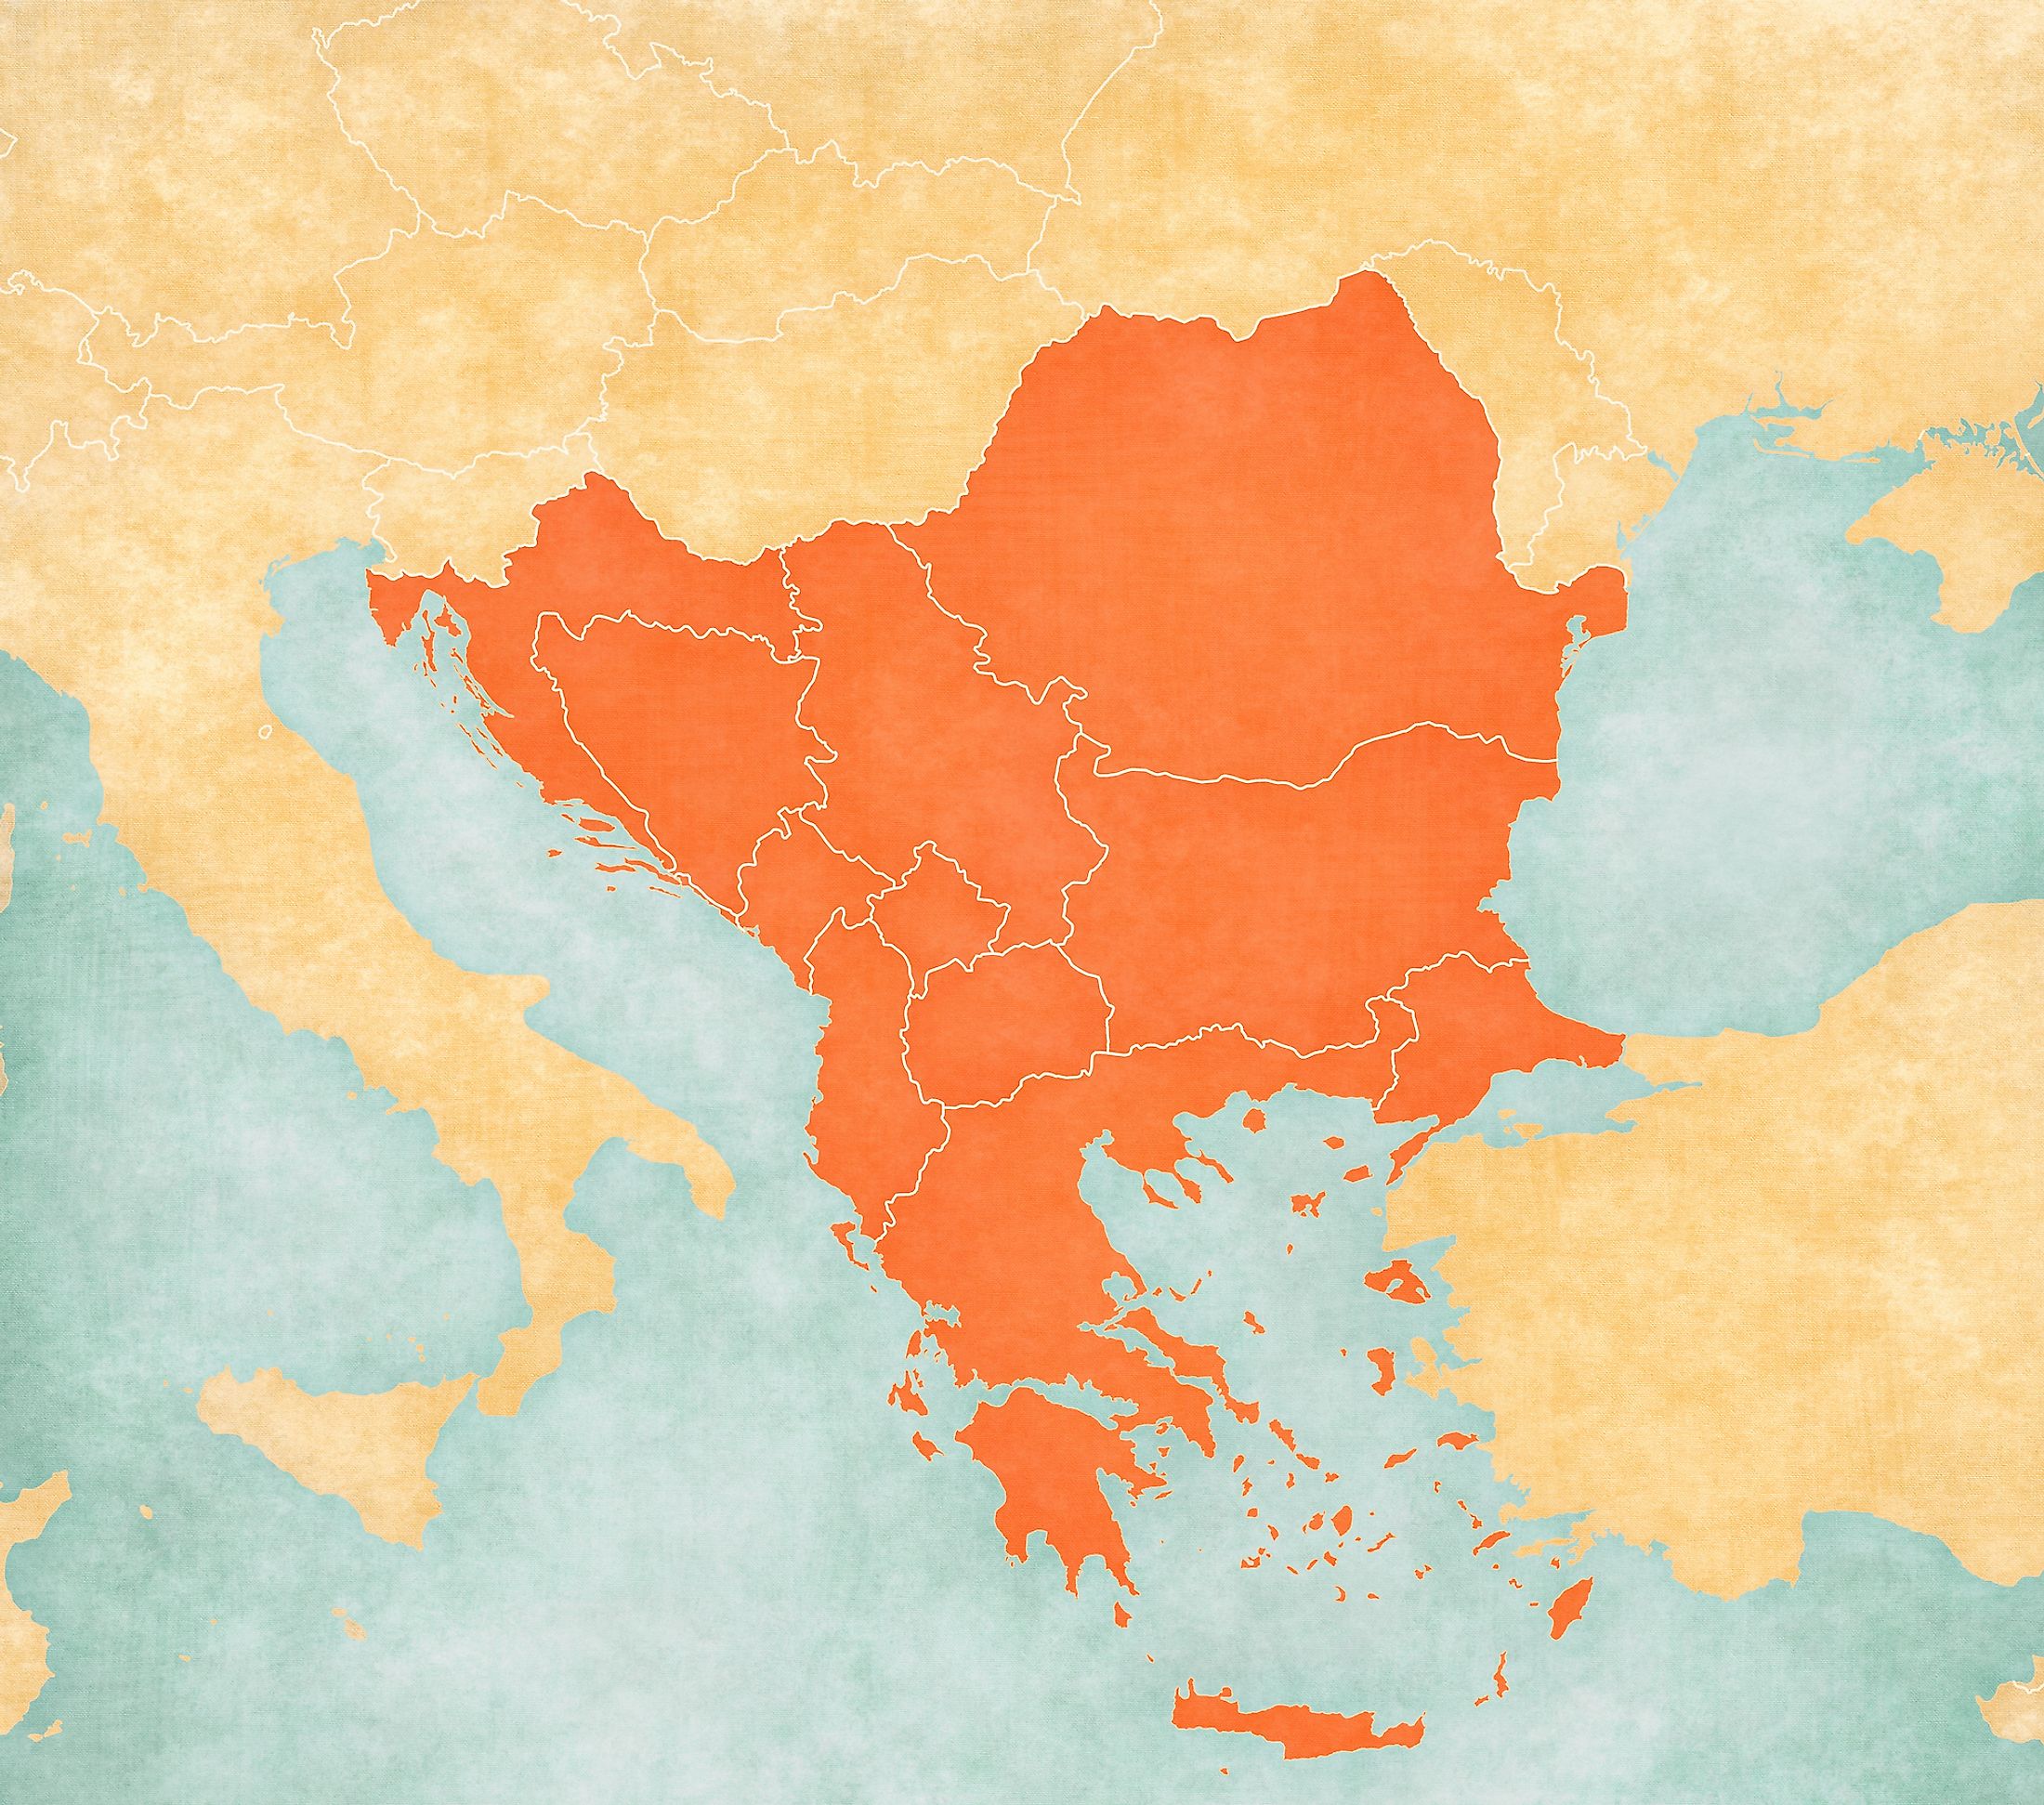 Balkan Peninsula On World Map